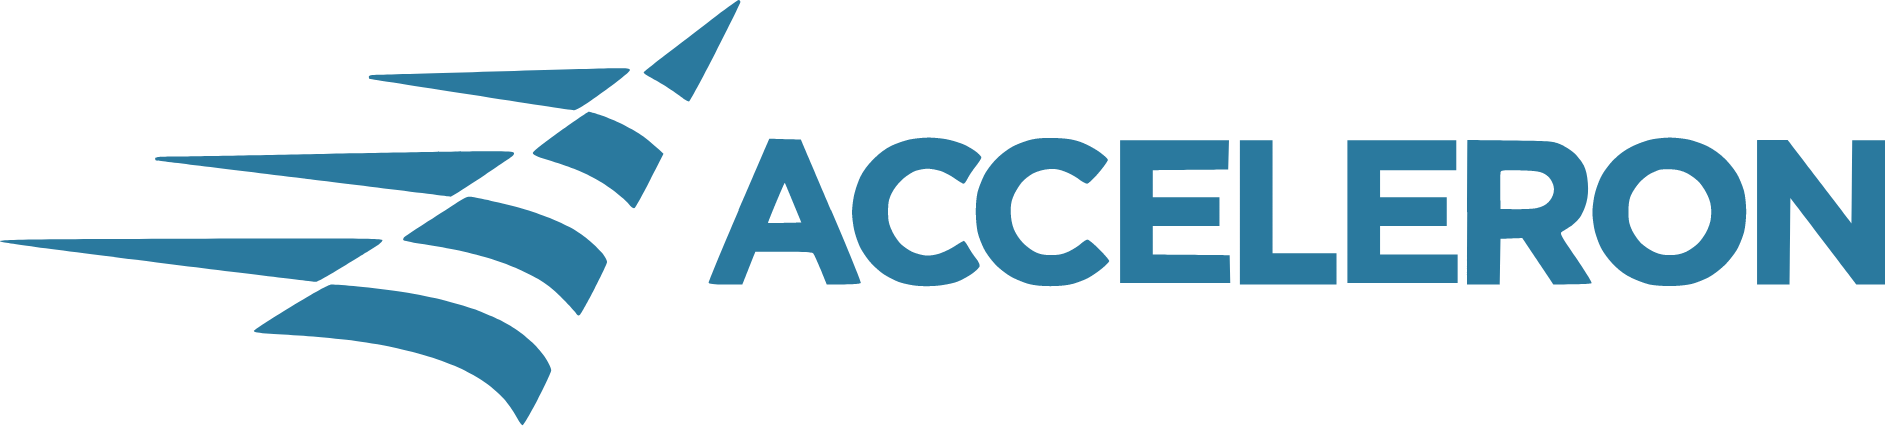 Acceleron Pharma logo large (transparent PNG)